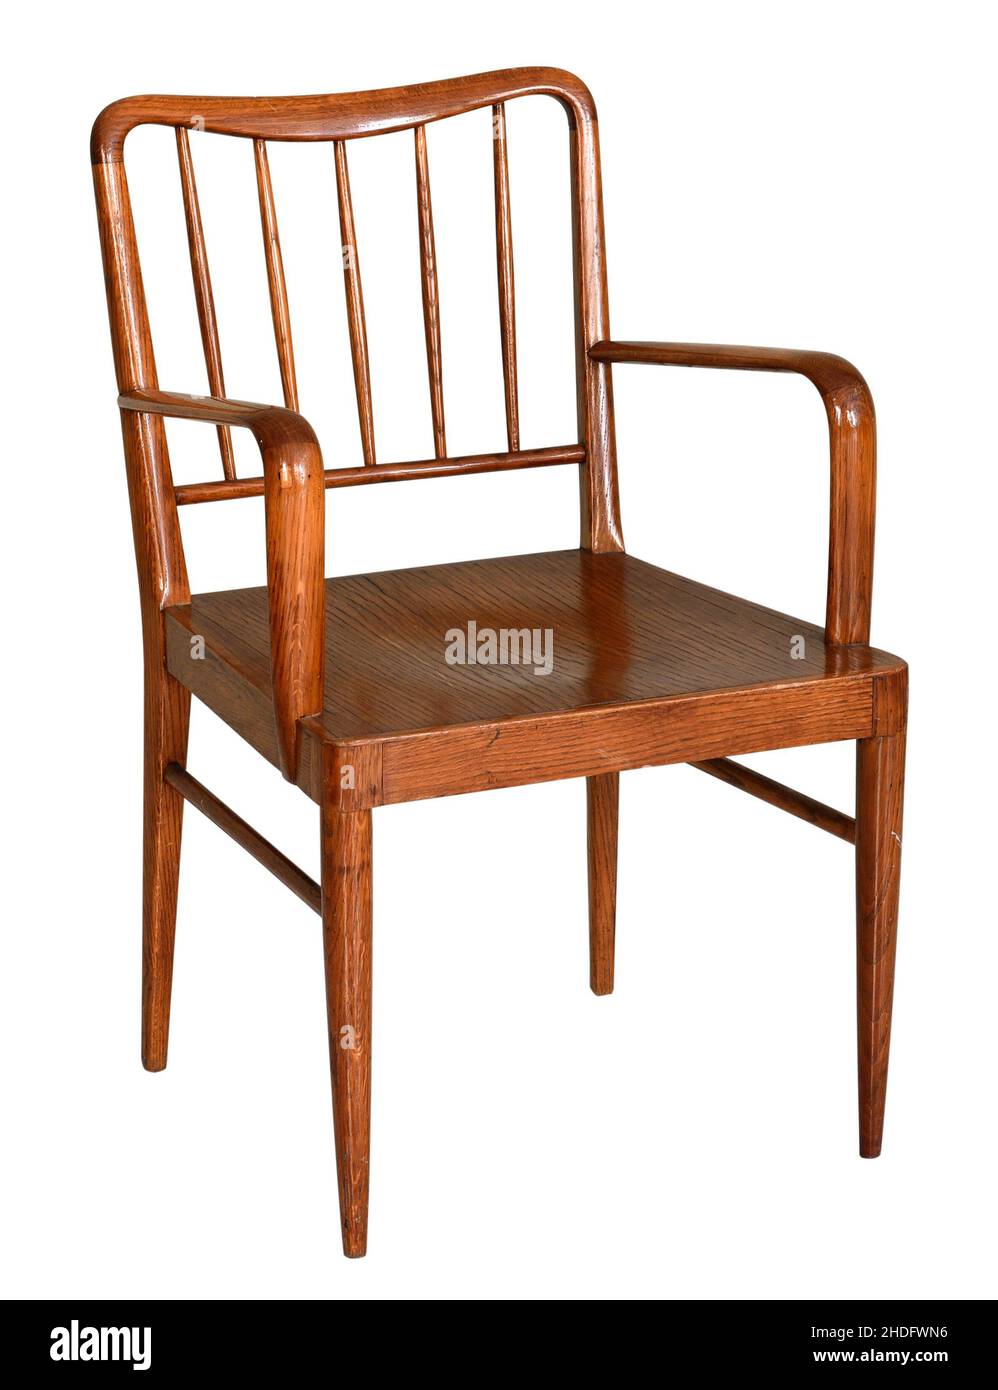 Möbel antik stuhl -Fotos und -Bildmaterial in hoher Auflösung – Alamy